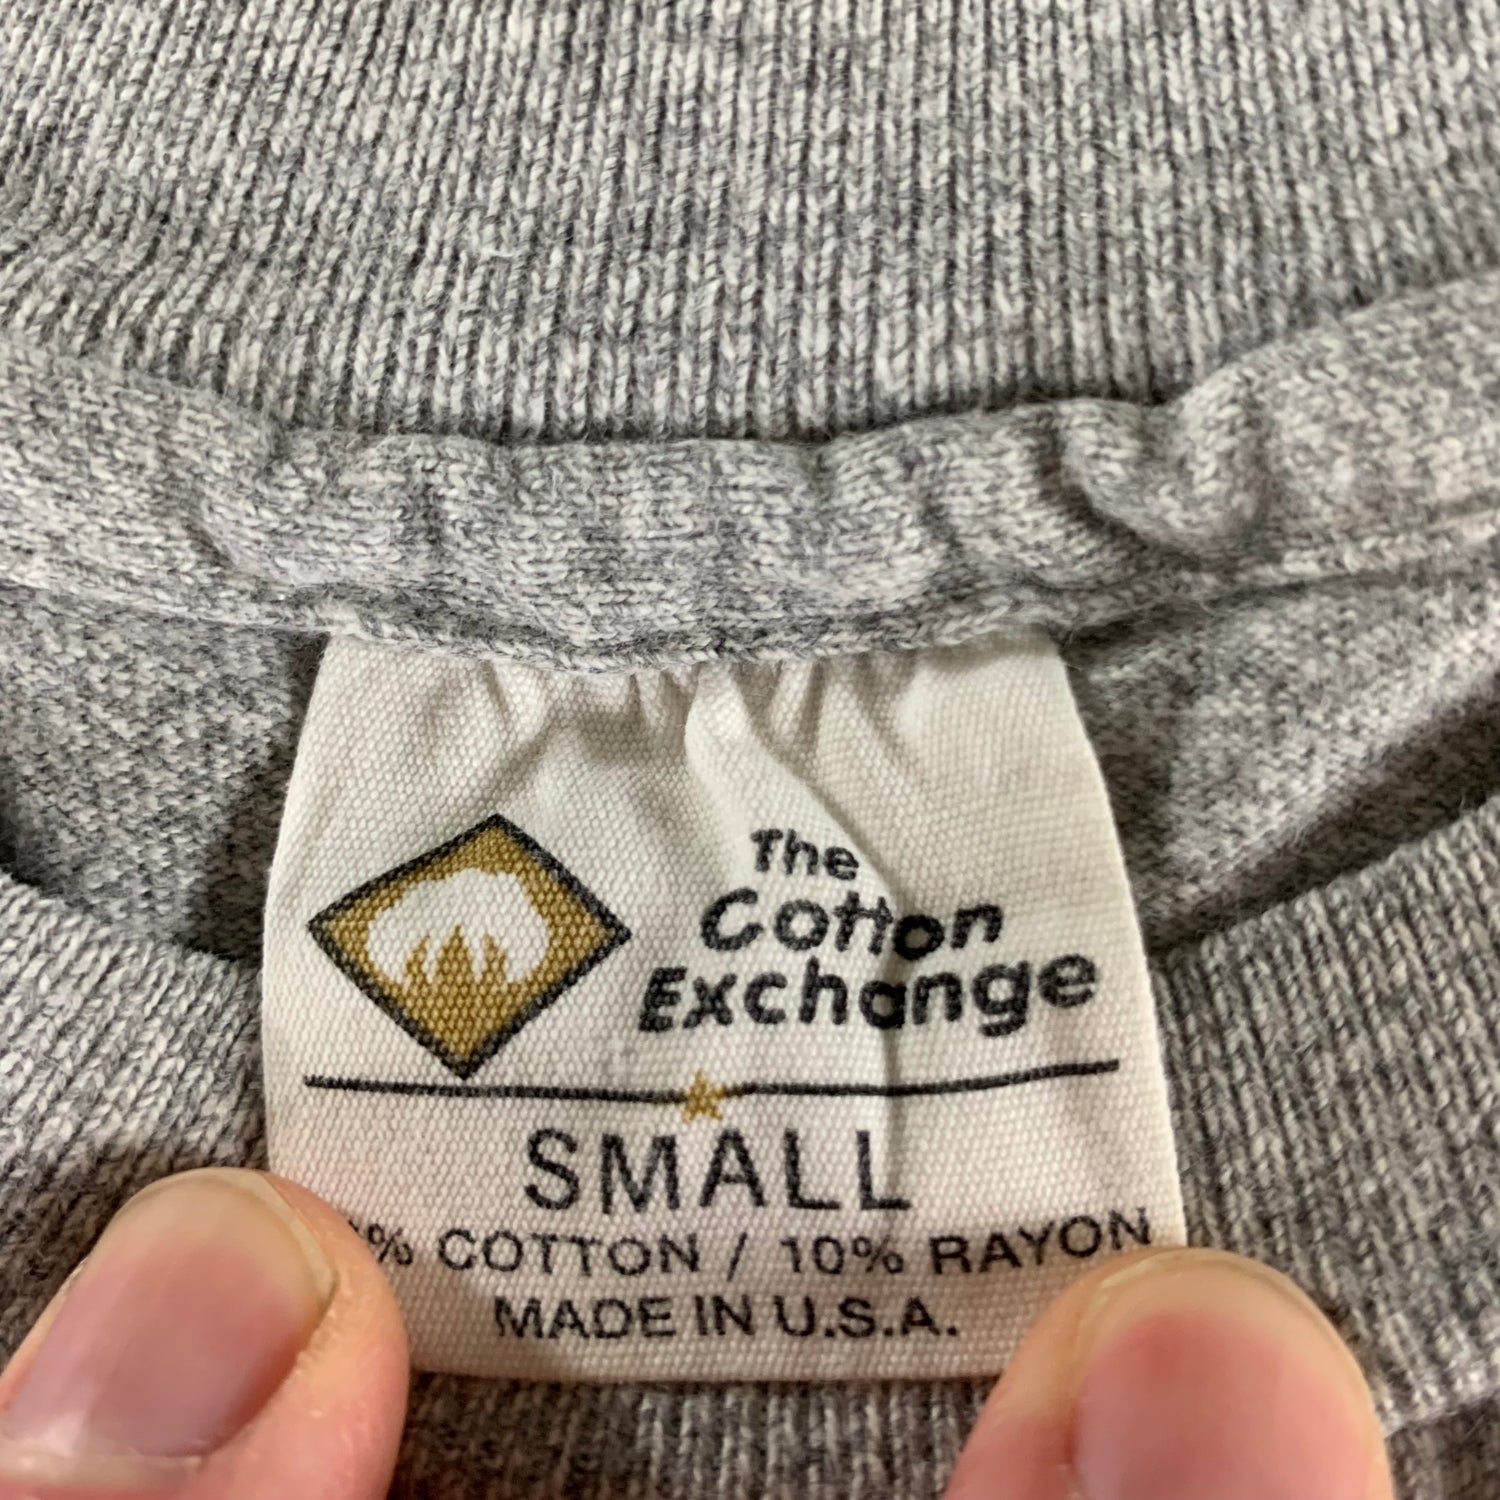 Vintage 1990s Southwest Missouri State T-shirt size Small